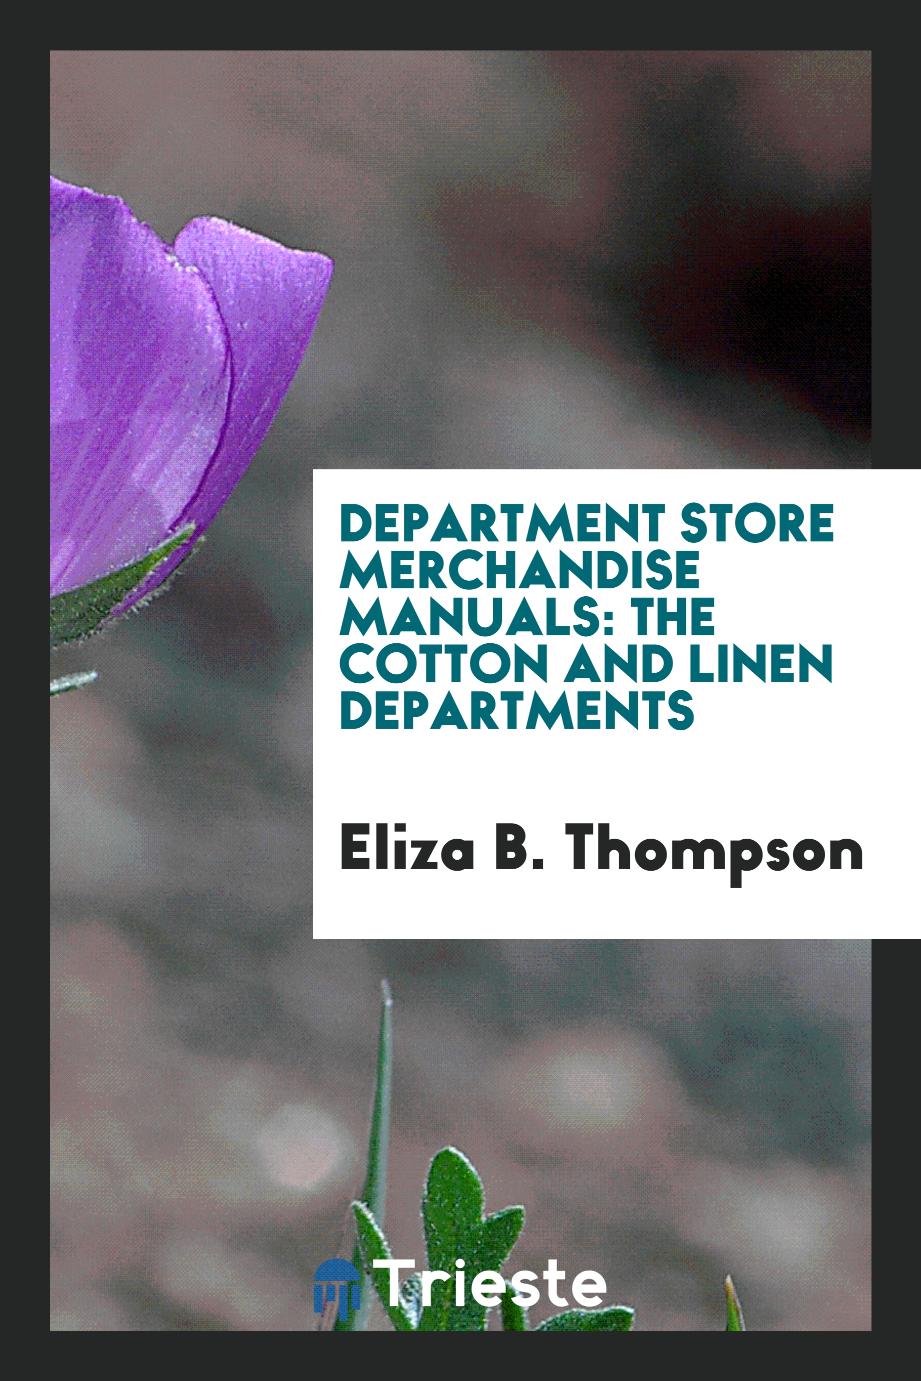 Department store merchandise manuals: the cotton and linen departments